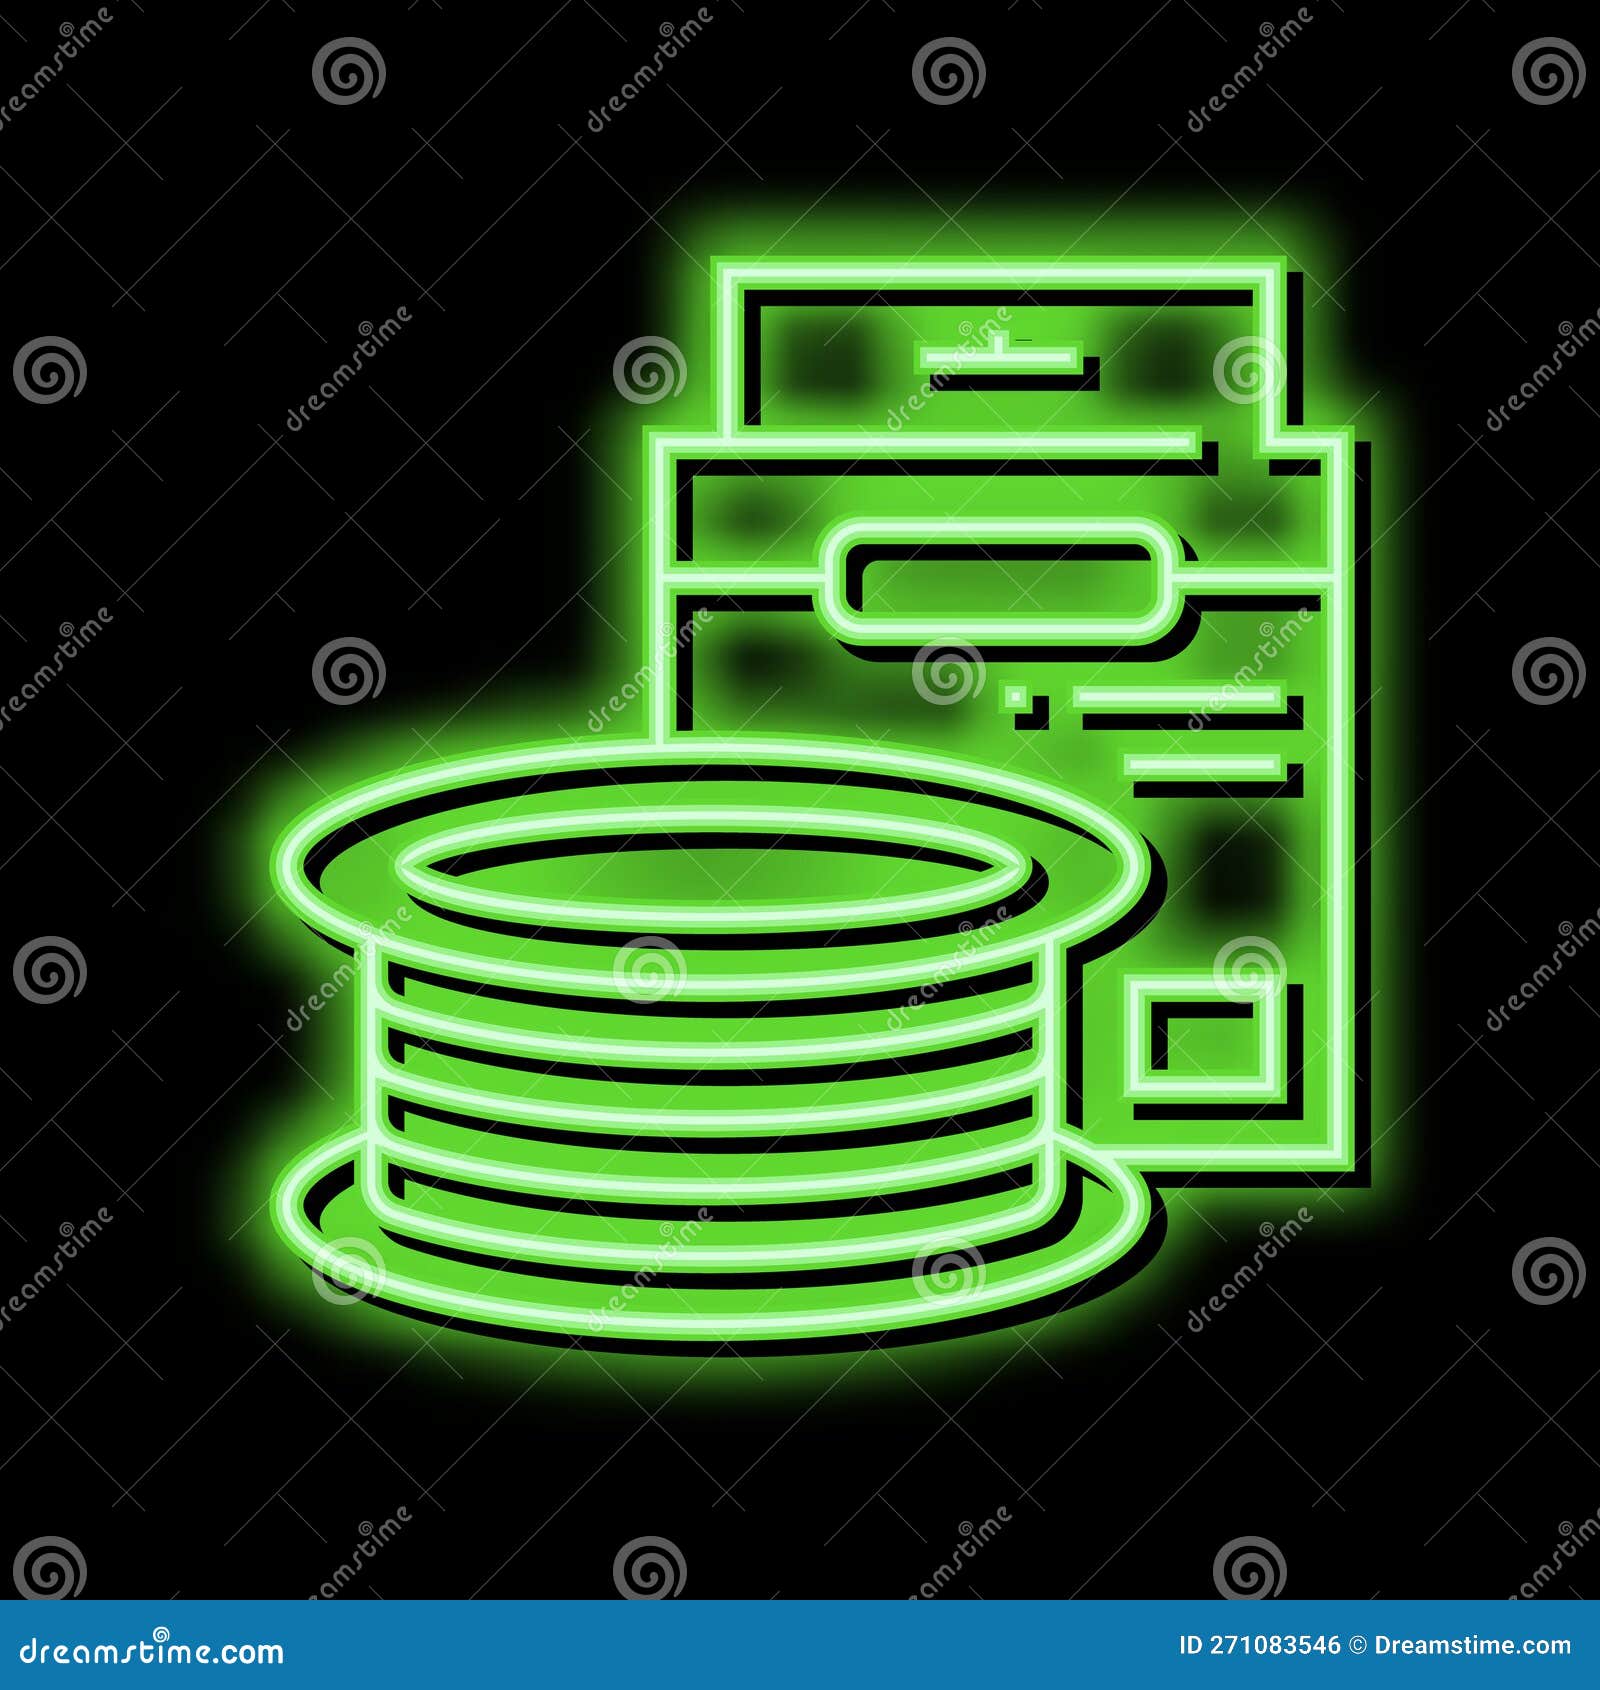 https://thumbs.dreamstime.com/z/braid-fishing-line-neon-glow-icon-illustration-light-sign-vector-271083546.jpg